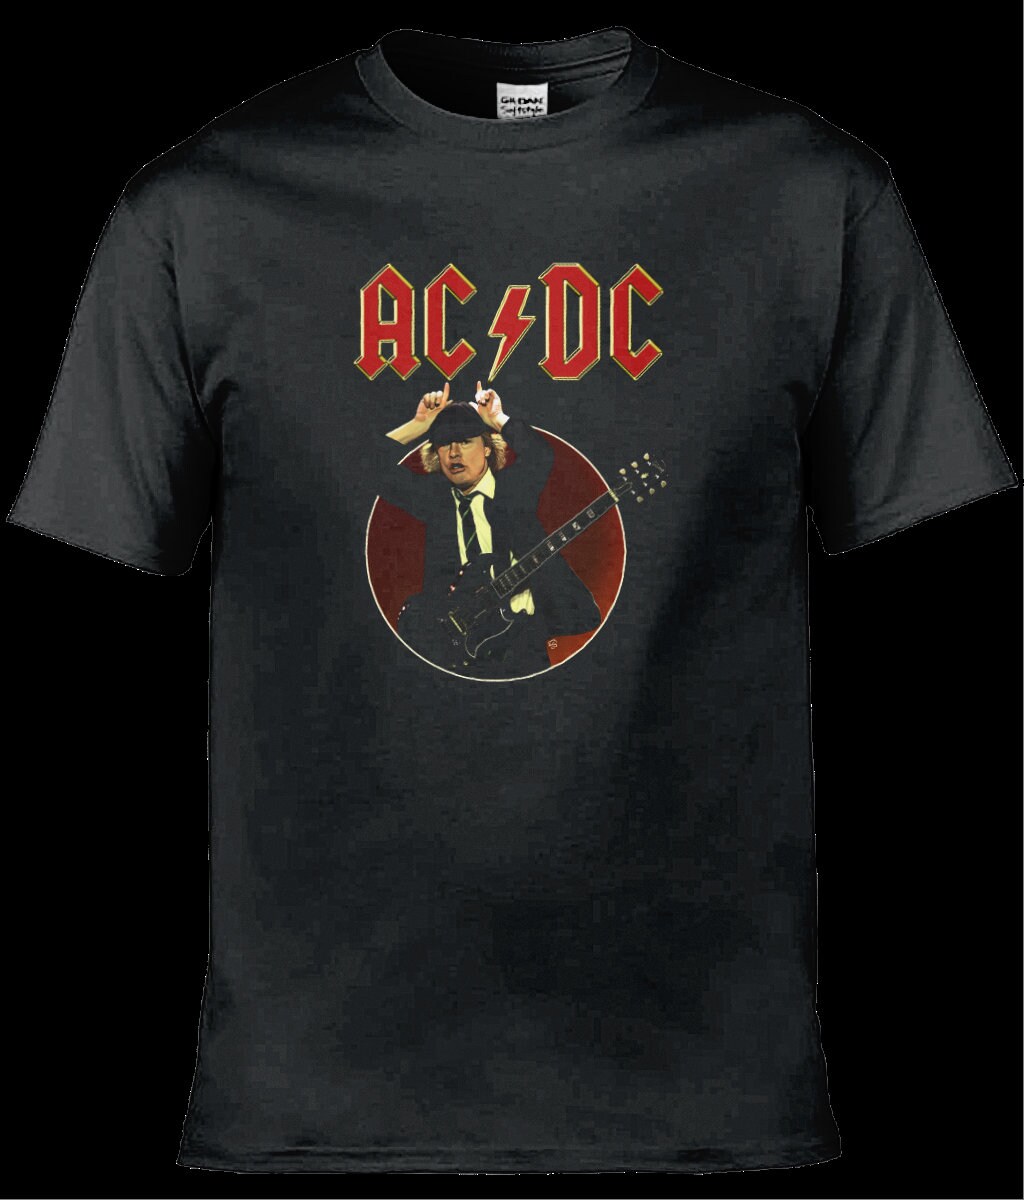 400 ROCK Band T-shirt Designs V2 Rock T-shirts Screen Printing Rock ...